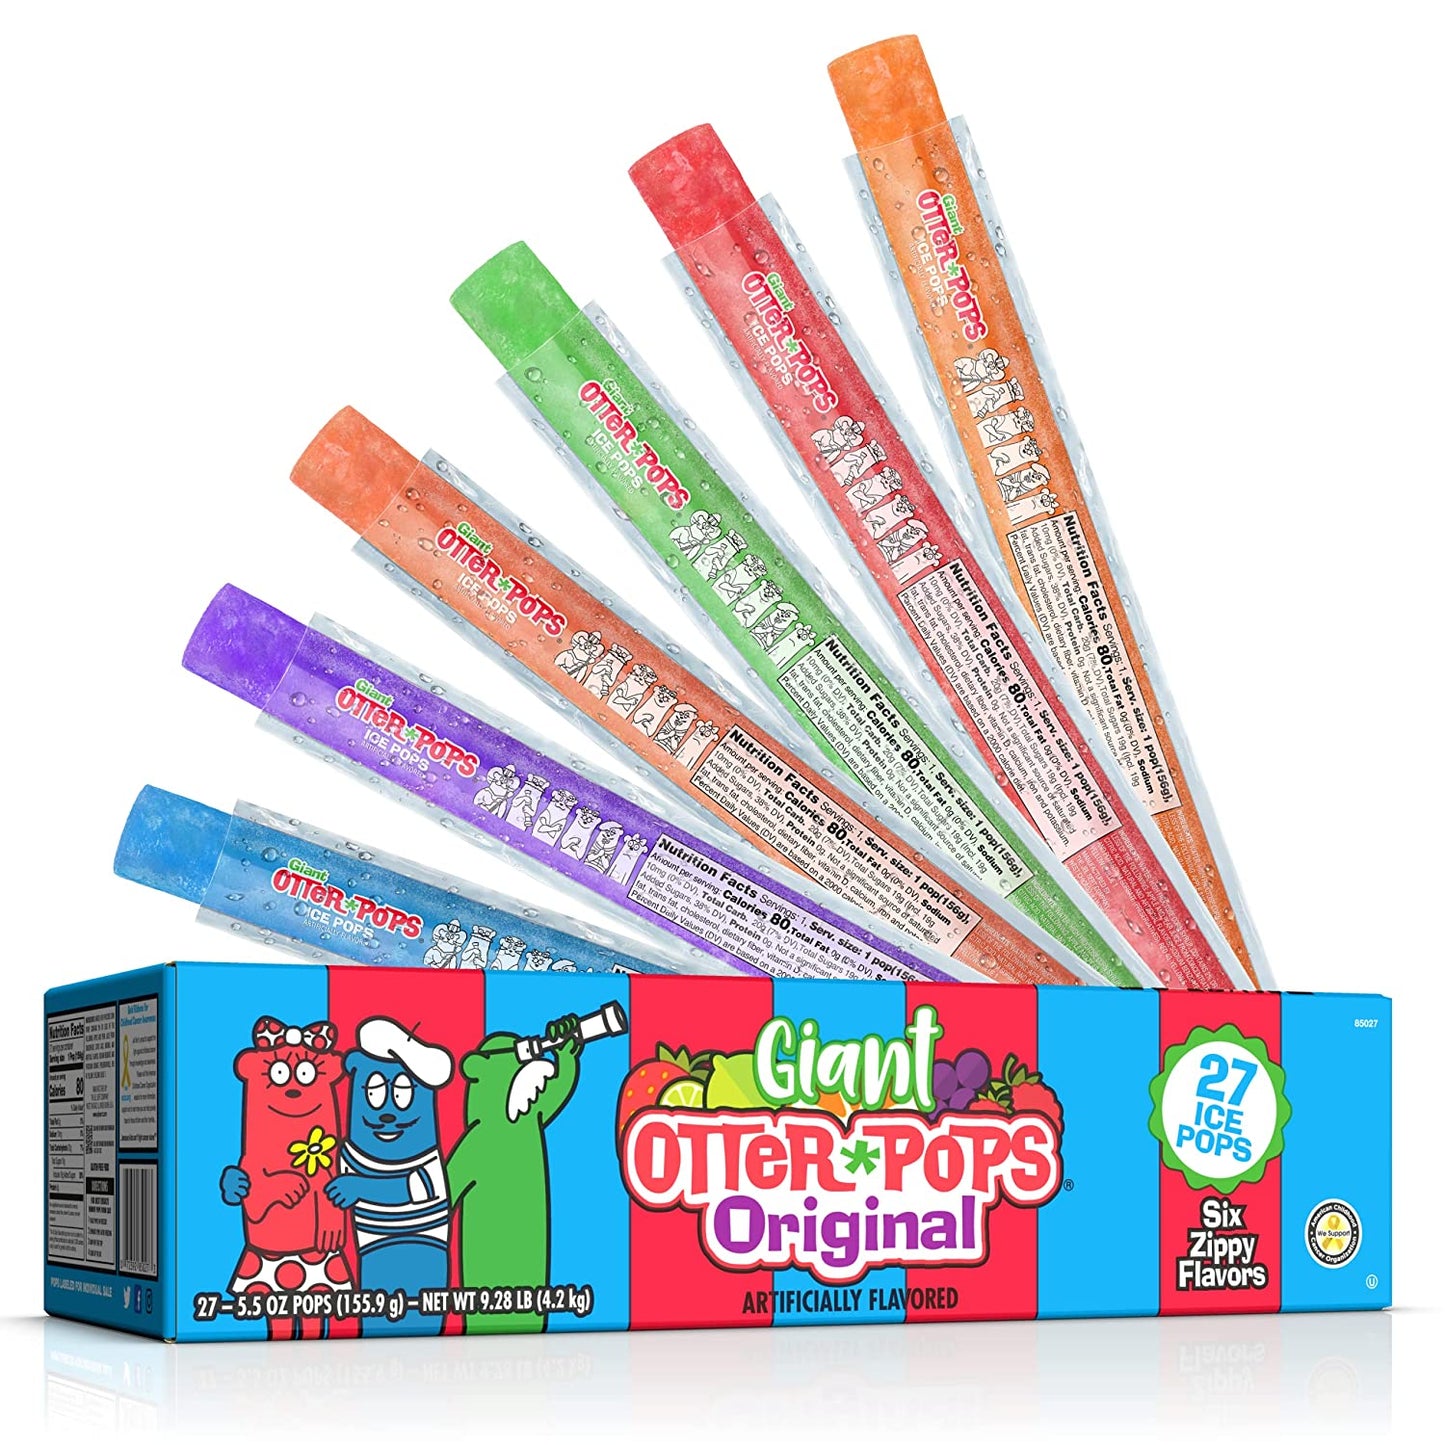 Otter Pops, Giant Original 5.5oz, 27 Ice Pops, Six Zippy Flavors